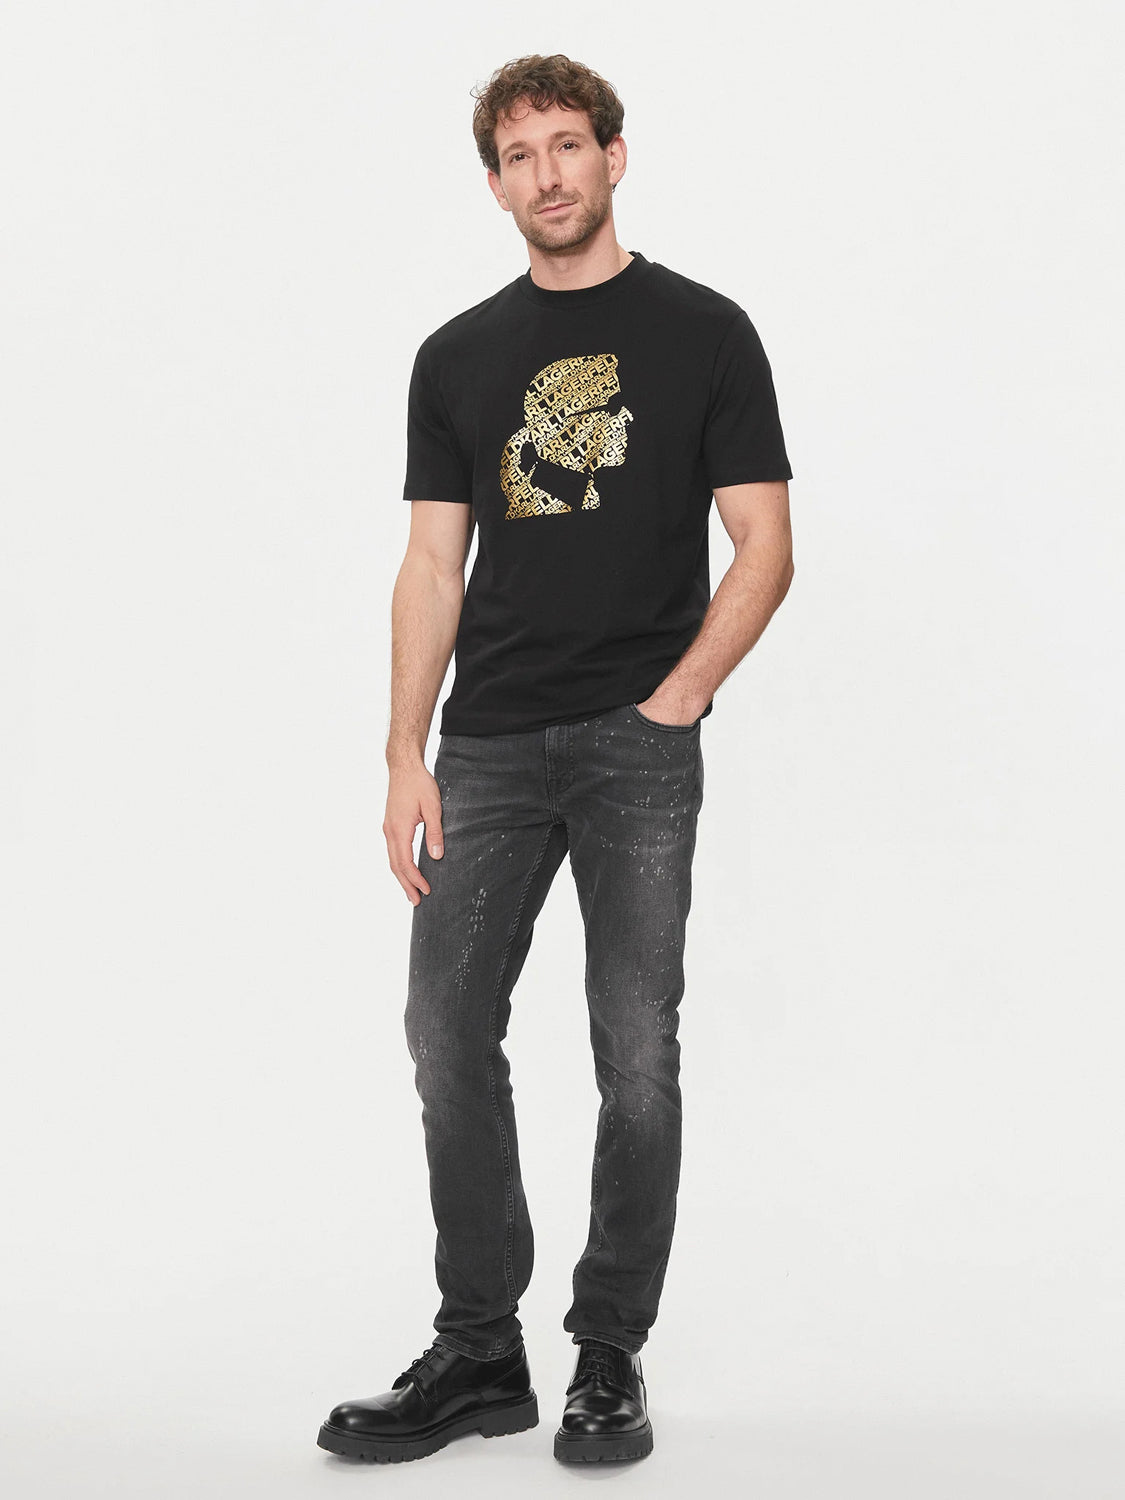 Karl Lagerfeld T Shirt Kl755082 Blk Gold Preto Ouro_shot1